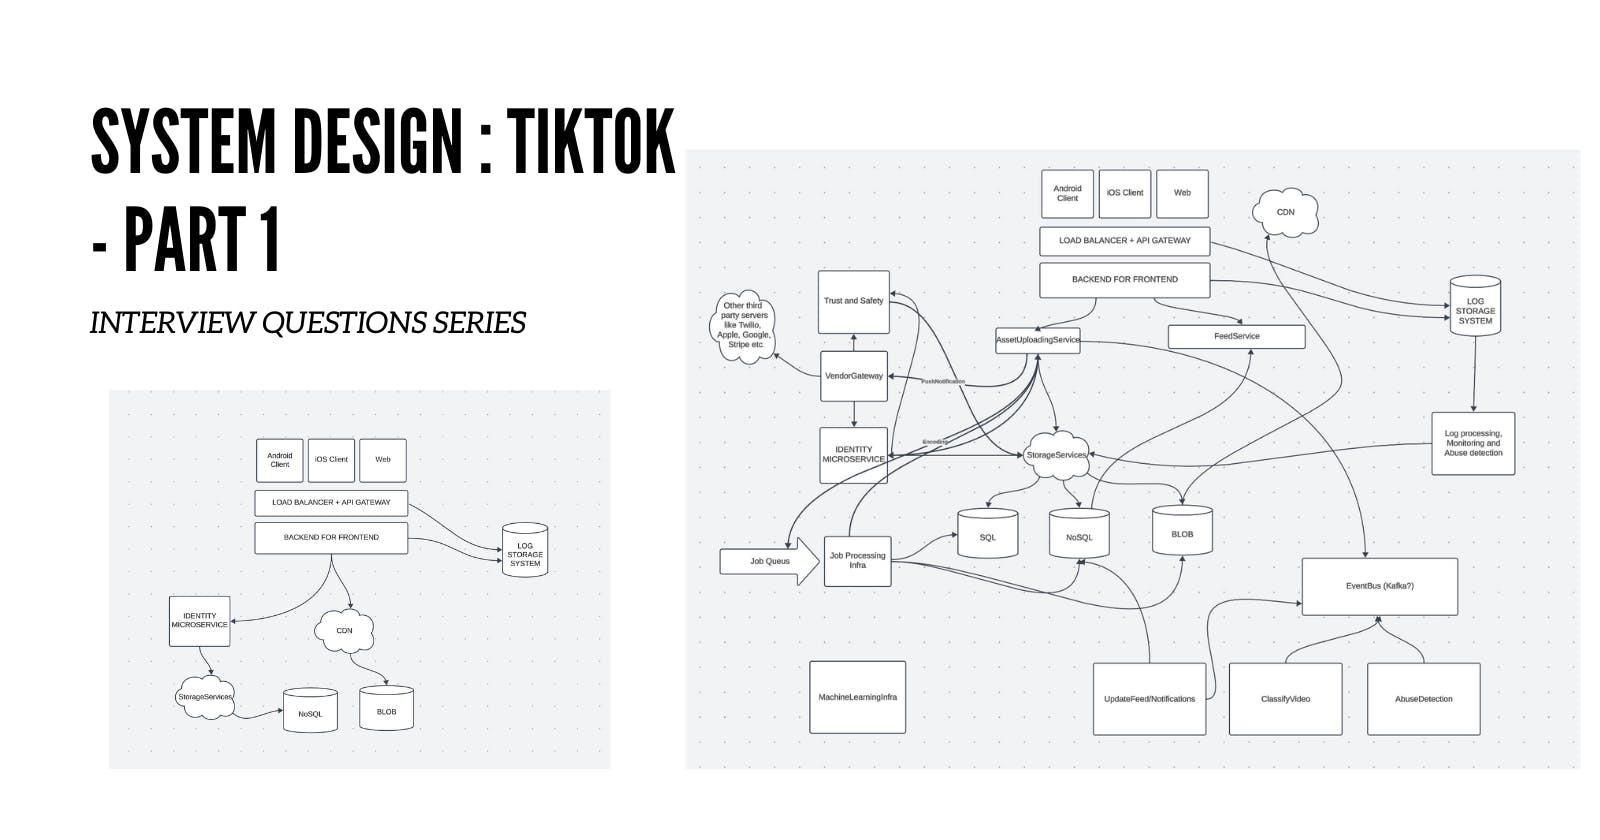 How to design Tiktok: System design interview